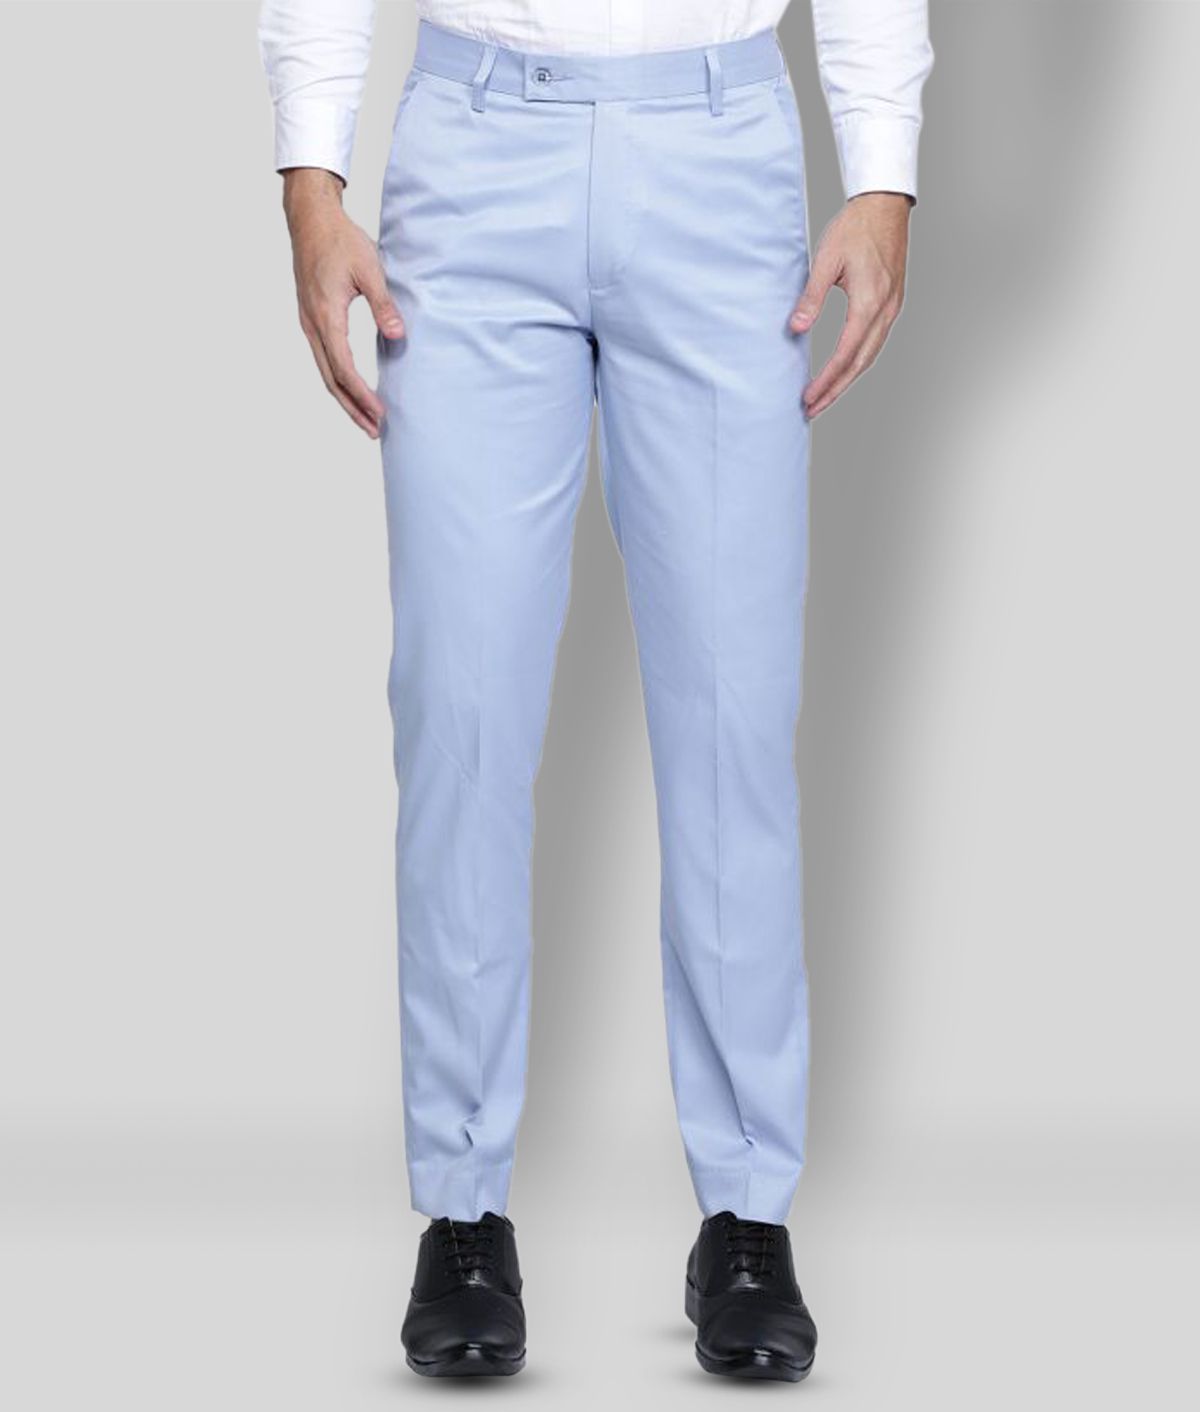     			Haul Chic - Light Blue Cotton Blend Slim Fit Men's Formal Pants (Pack of 1)